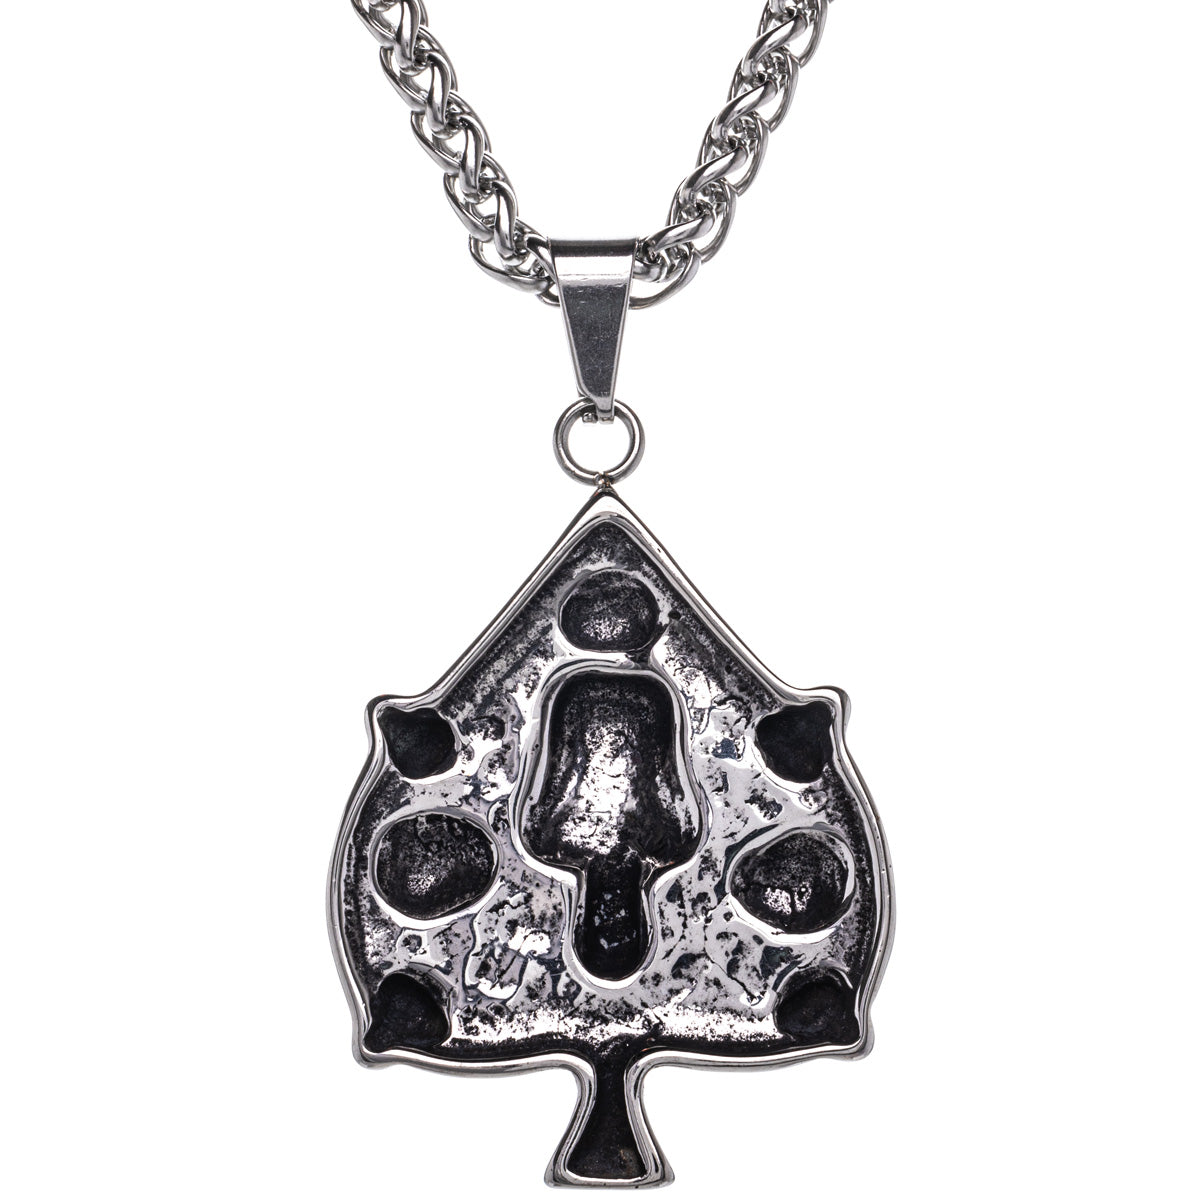 Rock-style Ace of Spades skull pendant necklace (Steel 316L)